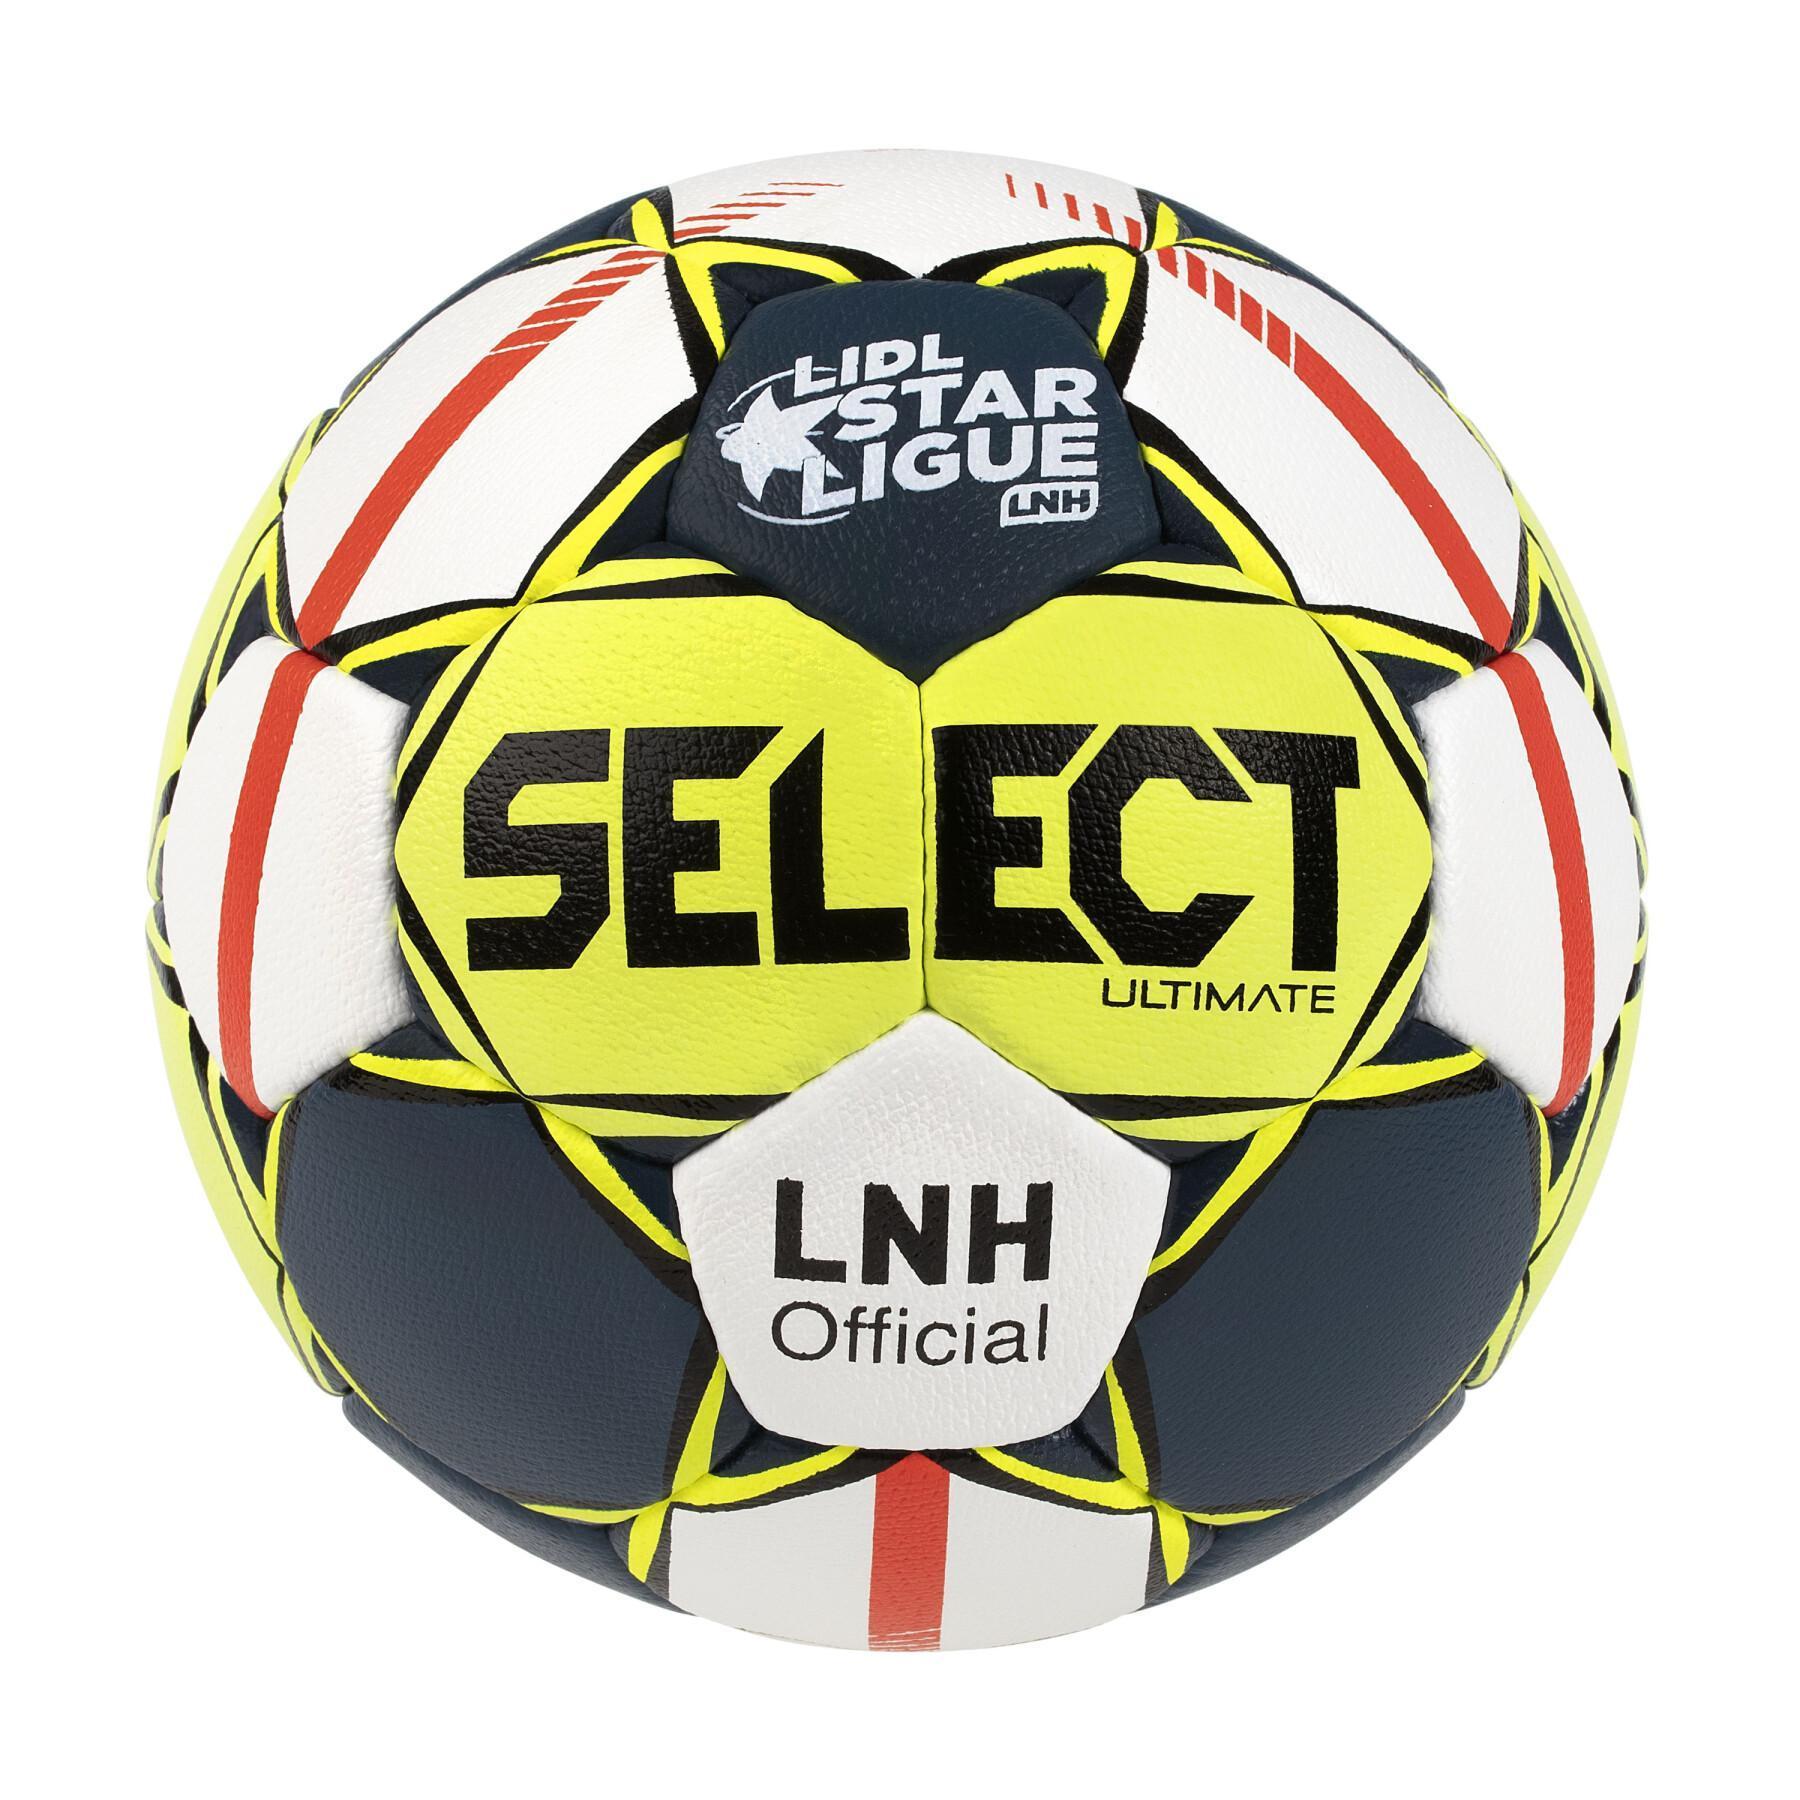 Oficjalna piłka LNH 2019/20